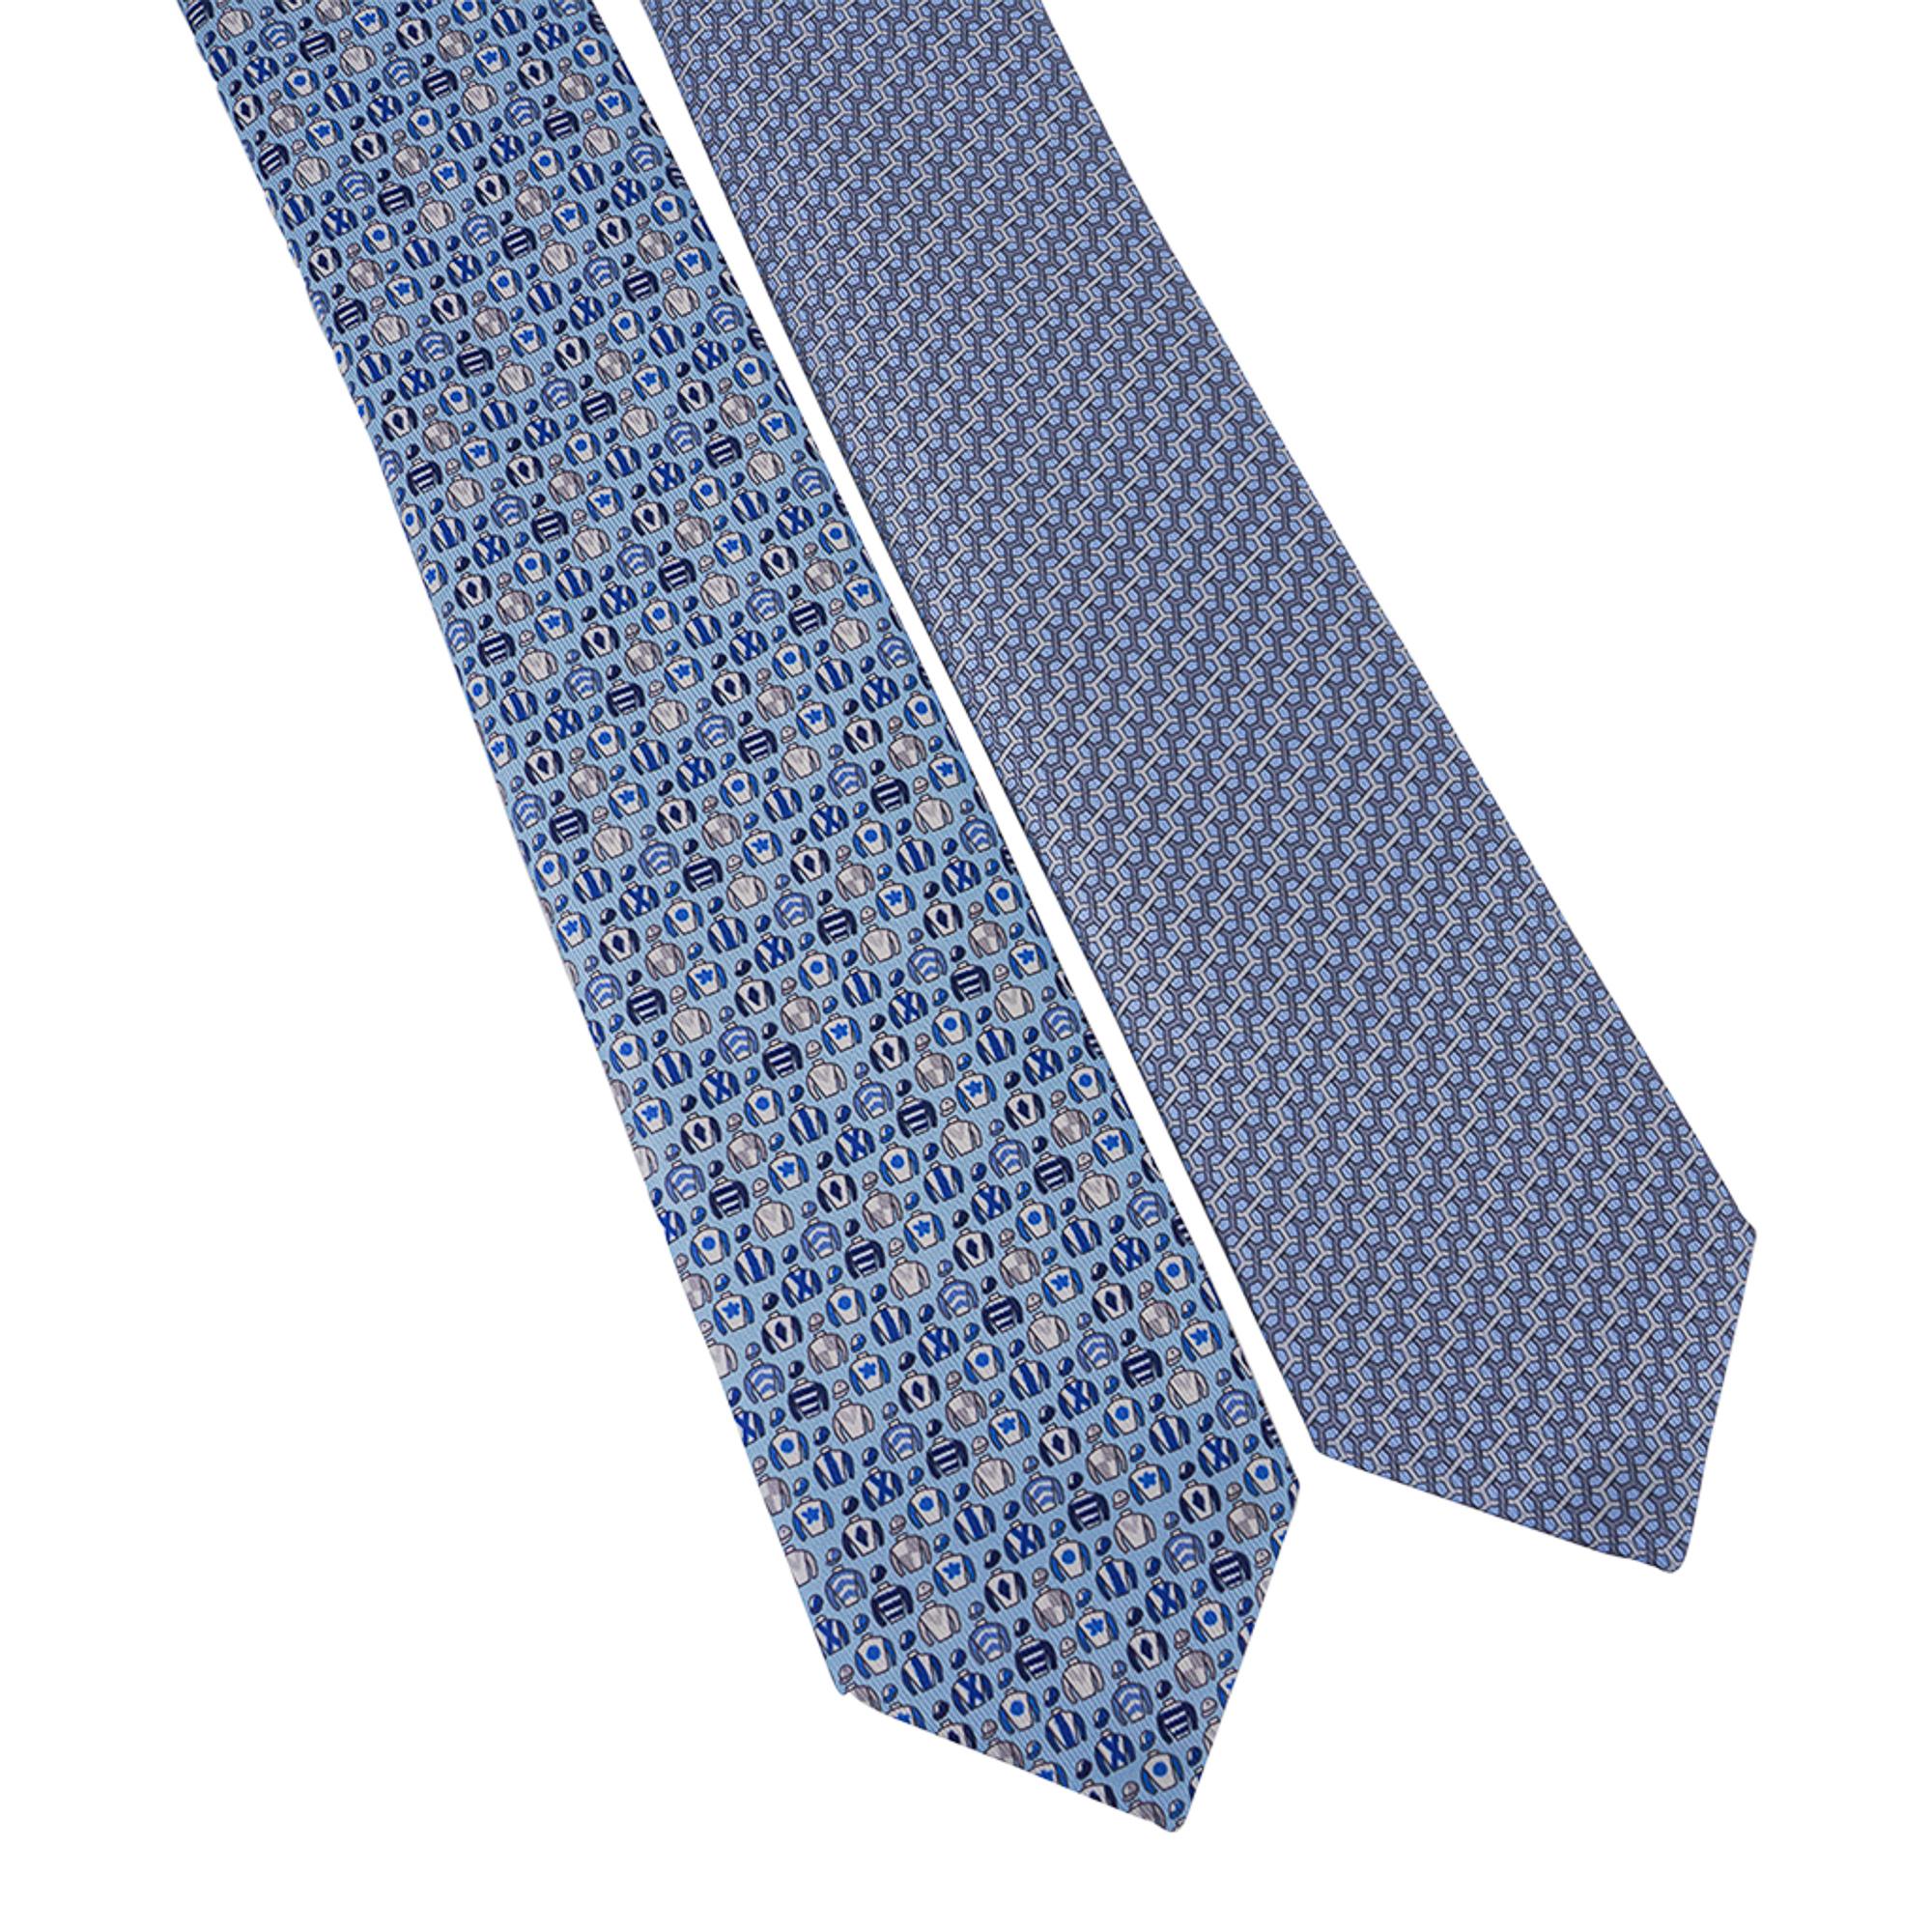 Hermes Tie Double 6 Imprimee Ciel / Marine Twillbi New w/Box In New Condition For Sale In Miami, FL